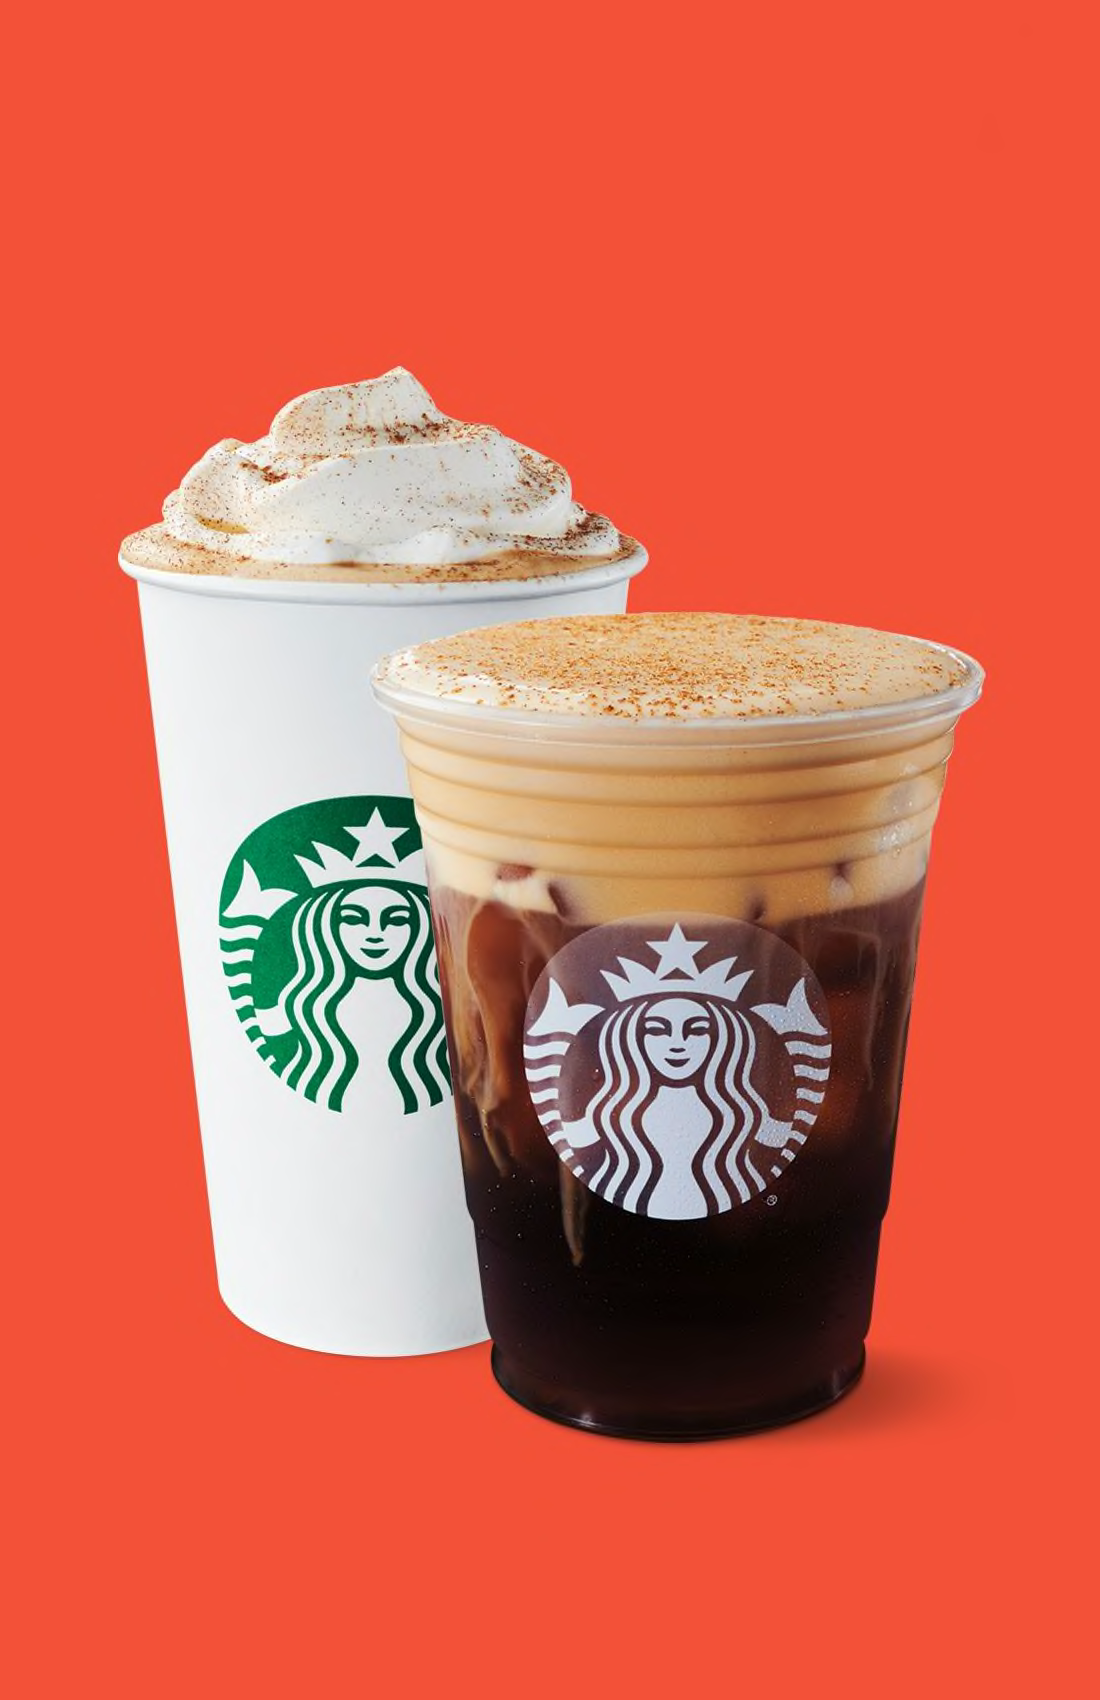 Starbucks Fall menu and Pumpkin Spice release date leaked on social media